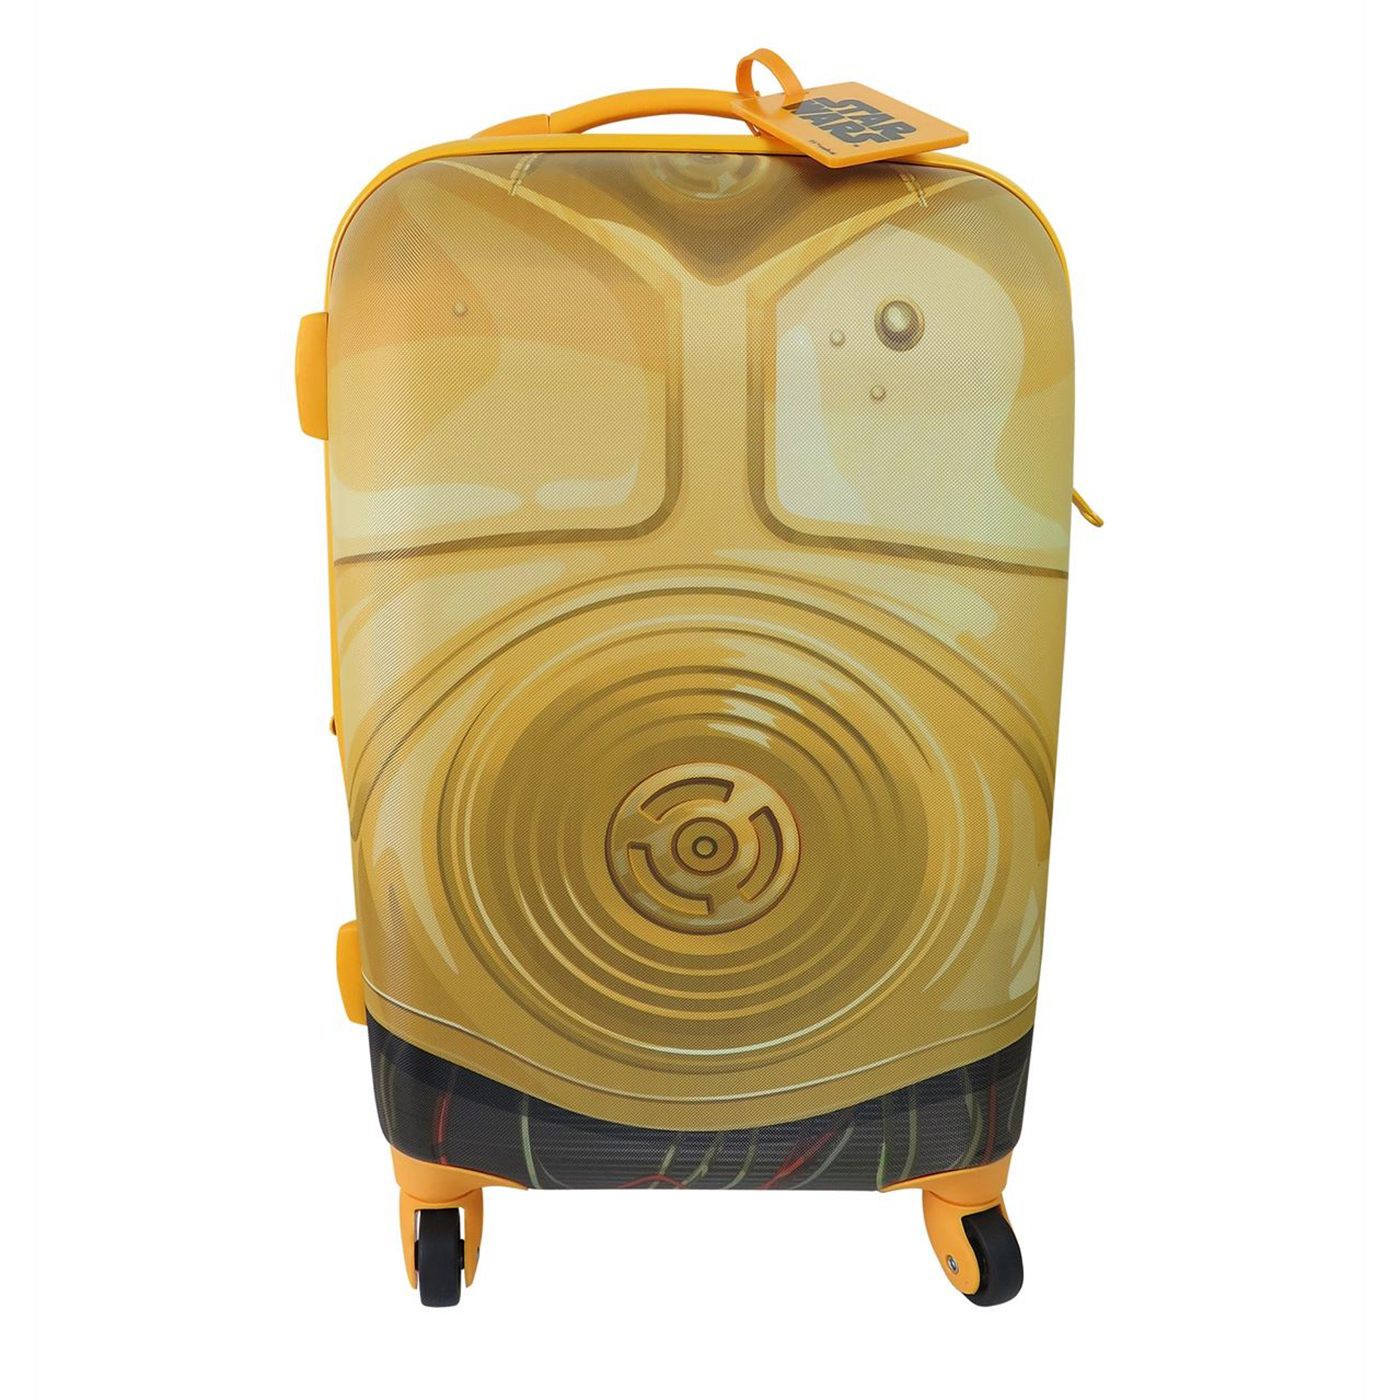 band Beugel tegel Star Wars C3PO Hardcase Samsonite Trolley Suitcase